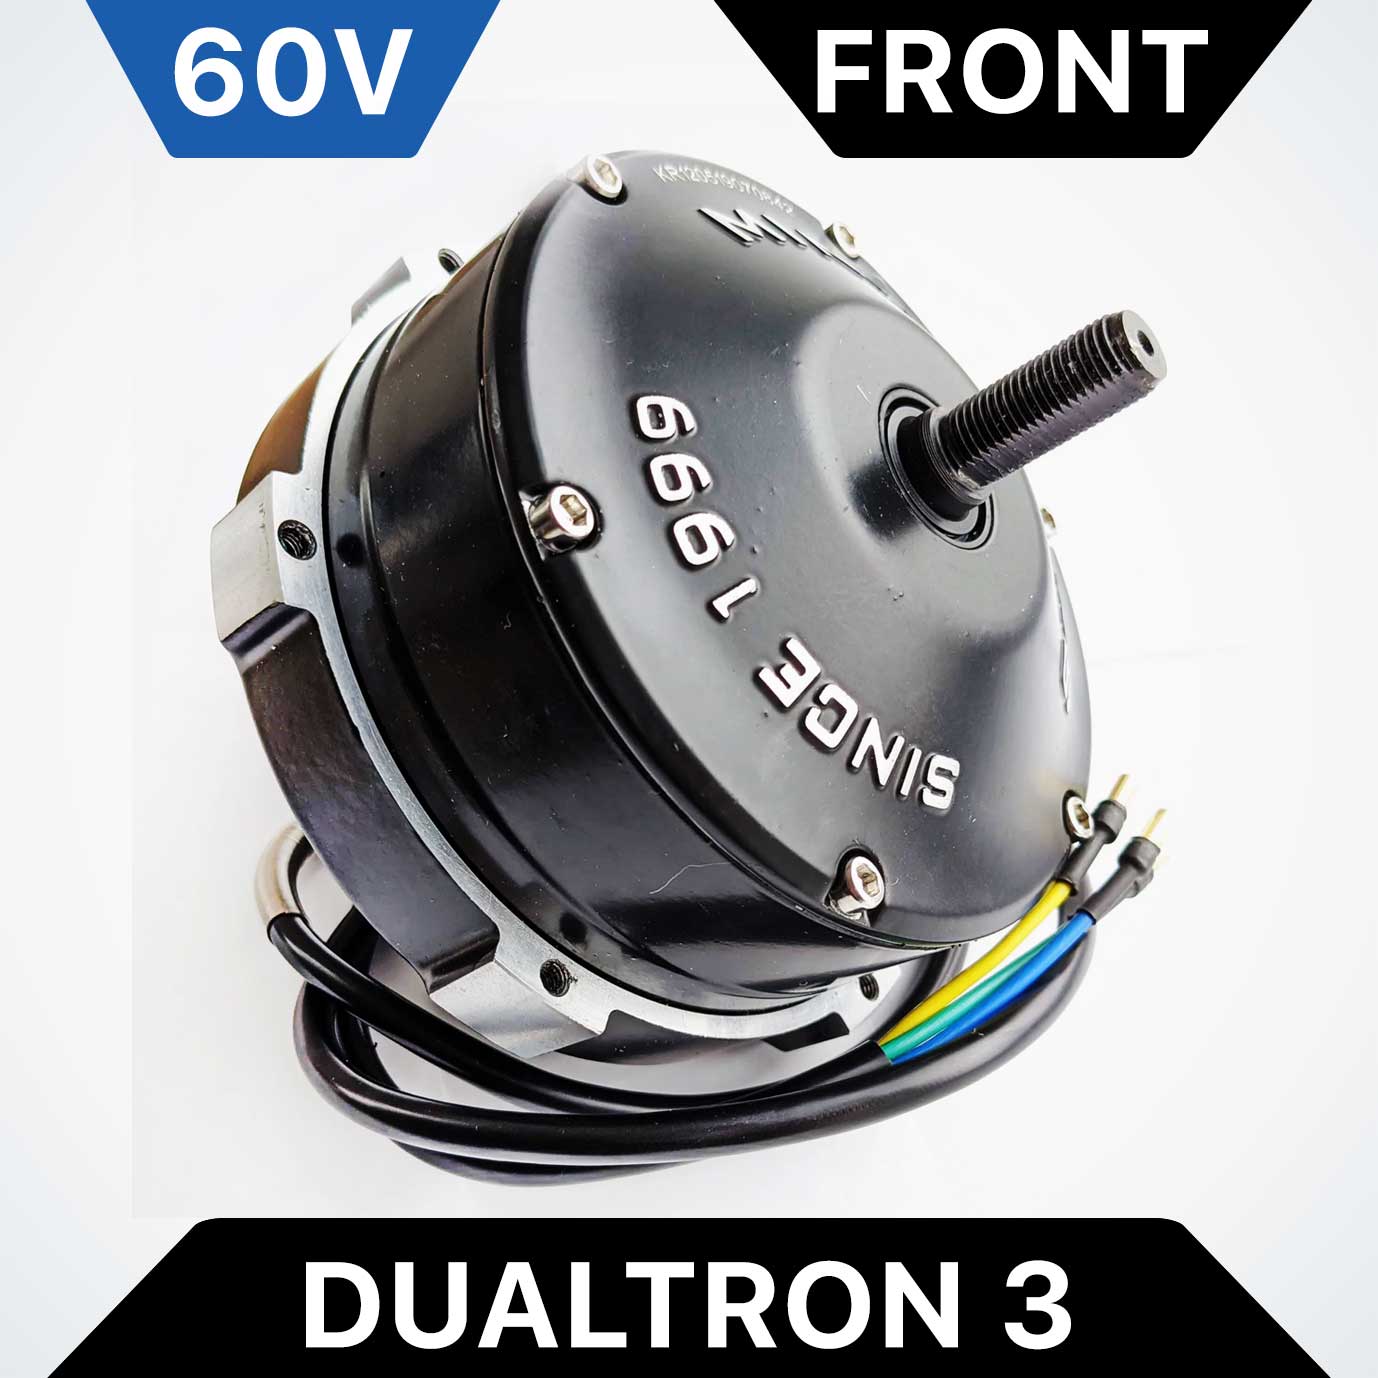 Front Motor for Dualtron 3 - 60V